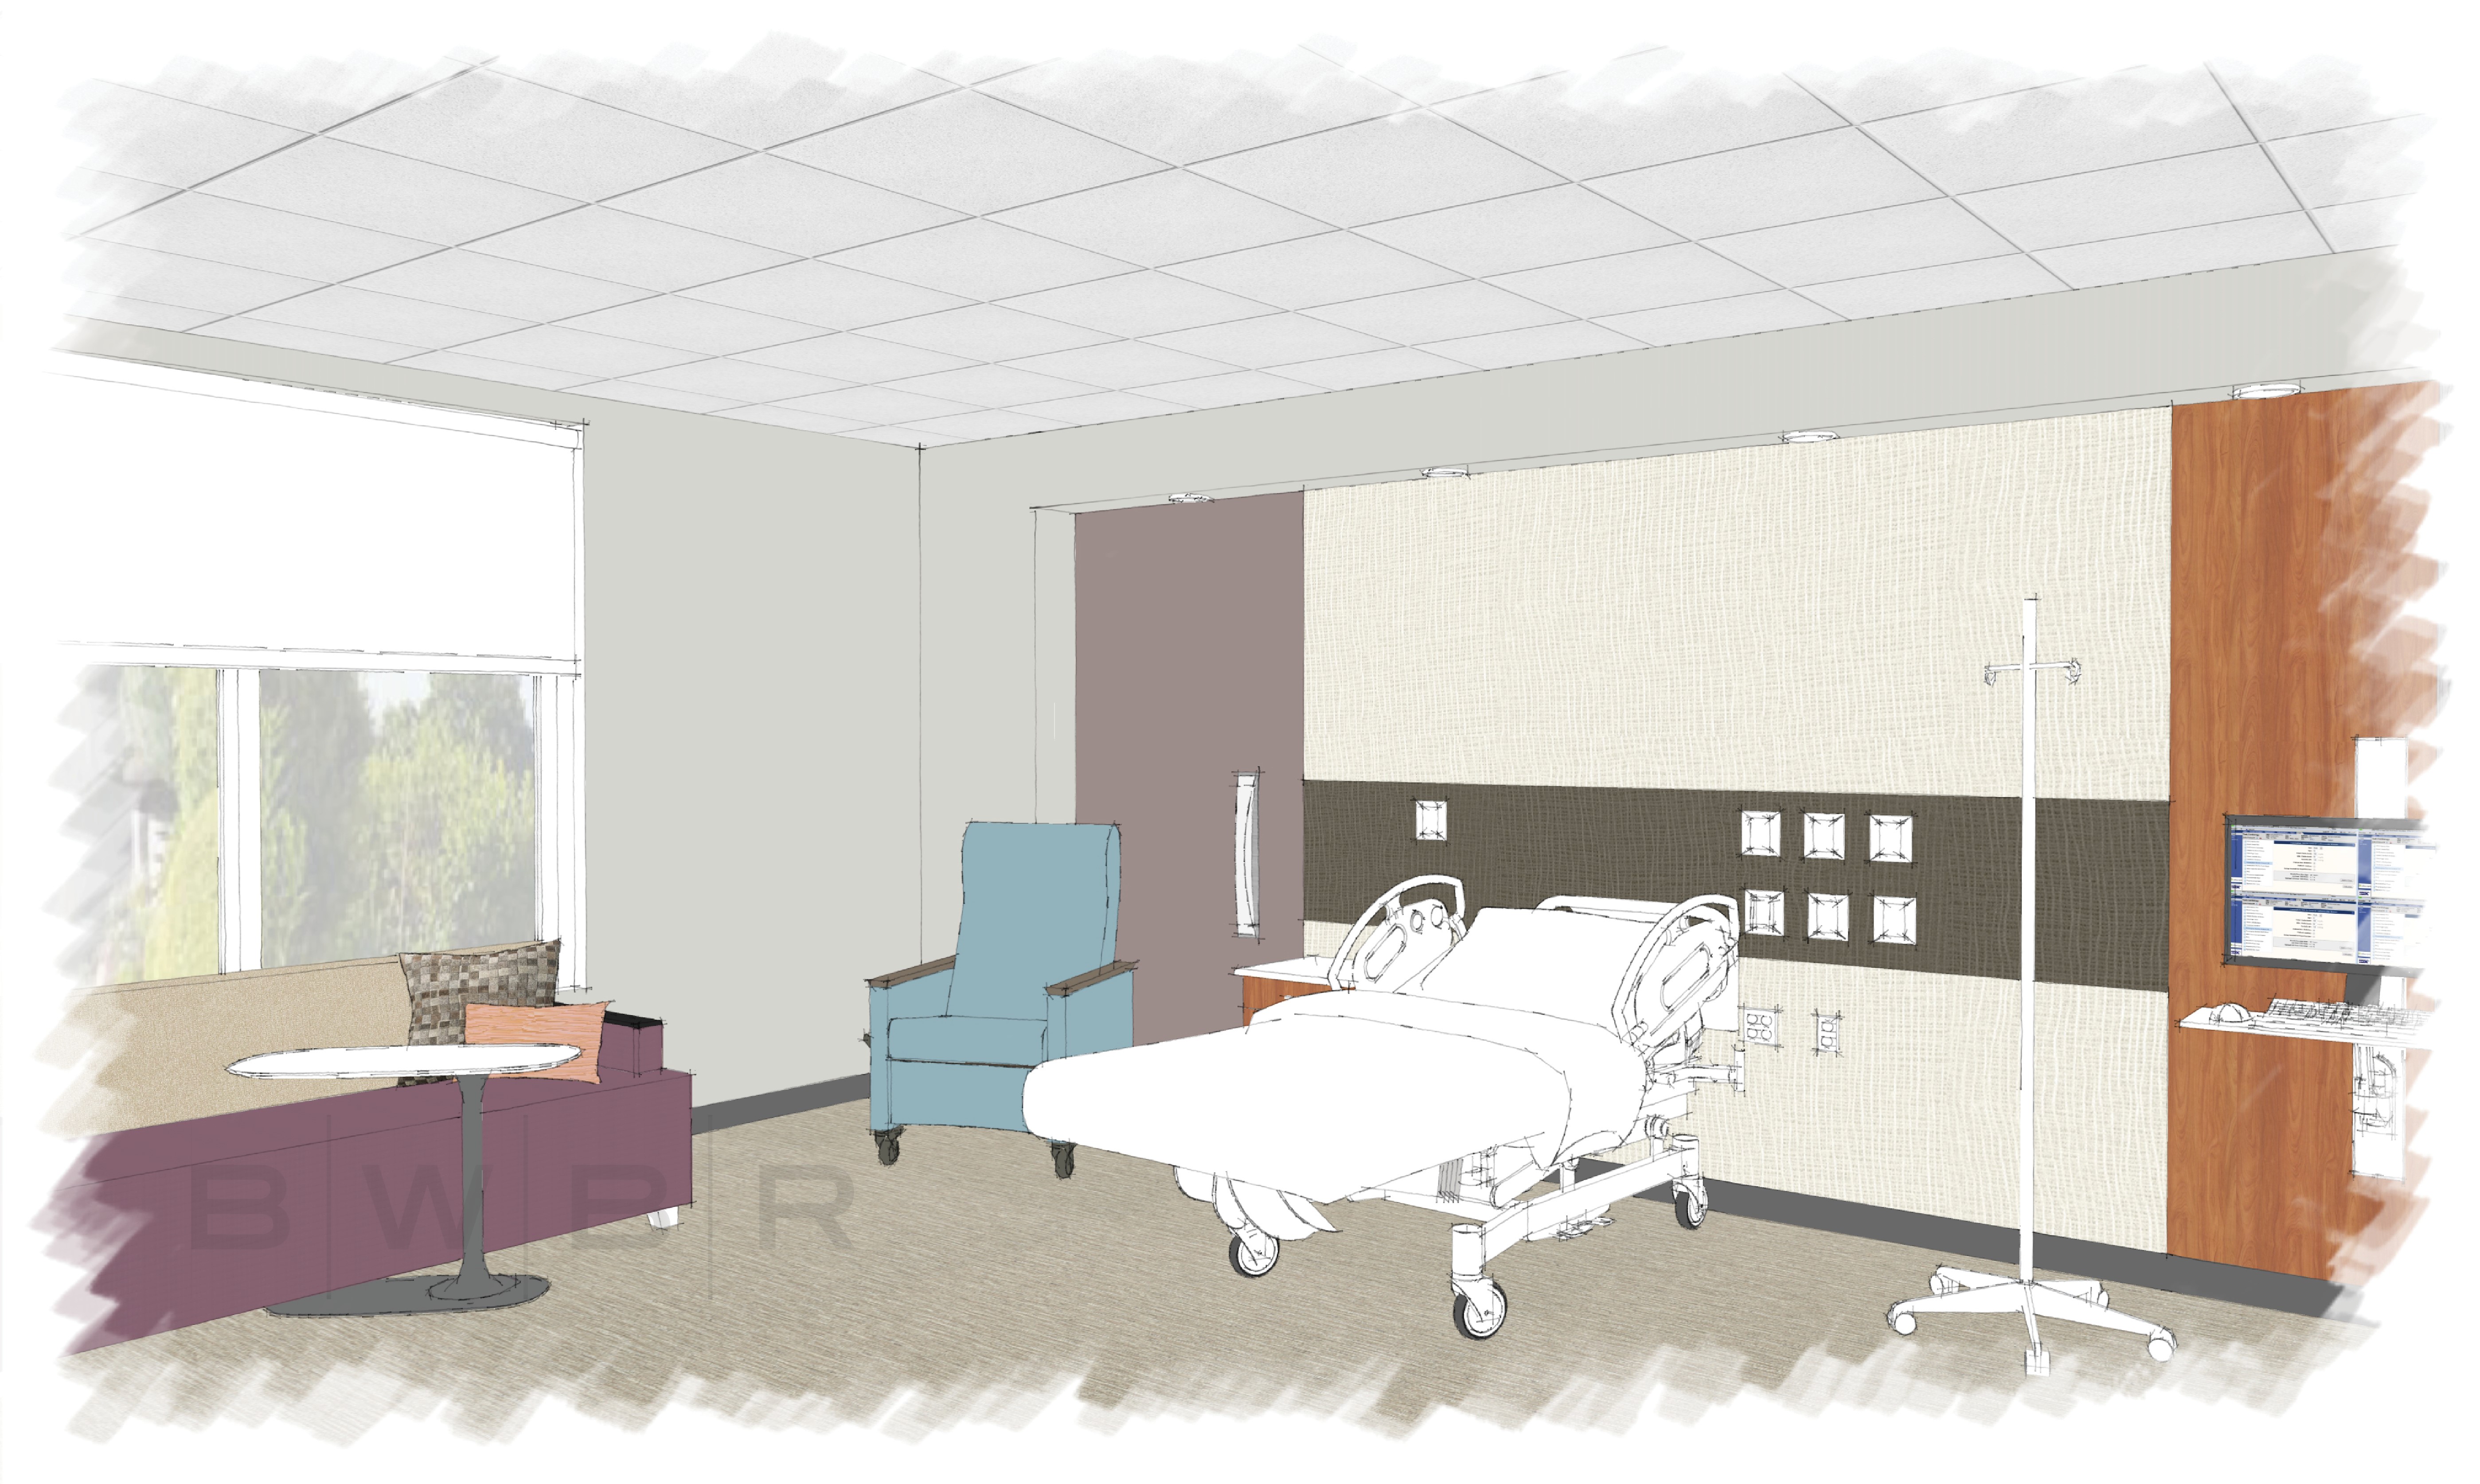 Northfield Hospital and Clinics - Birth Center Addition